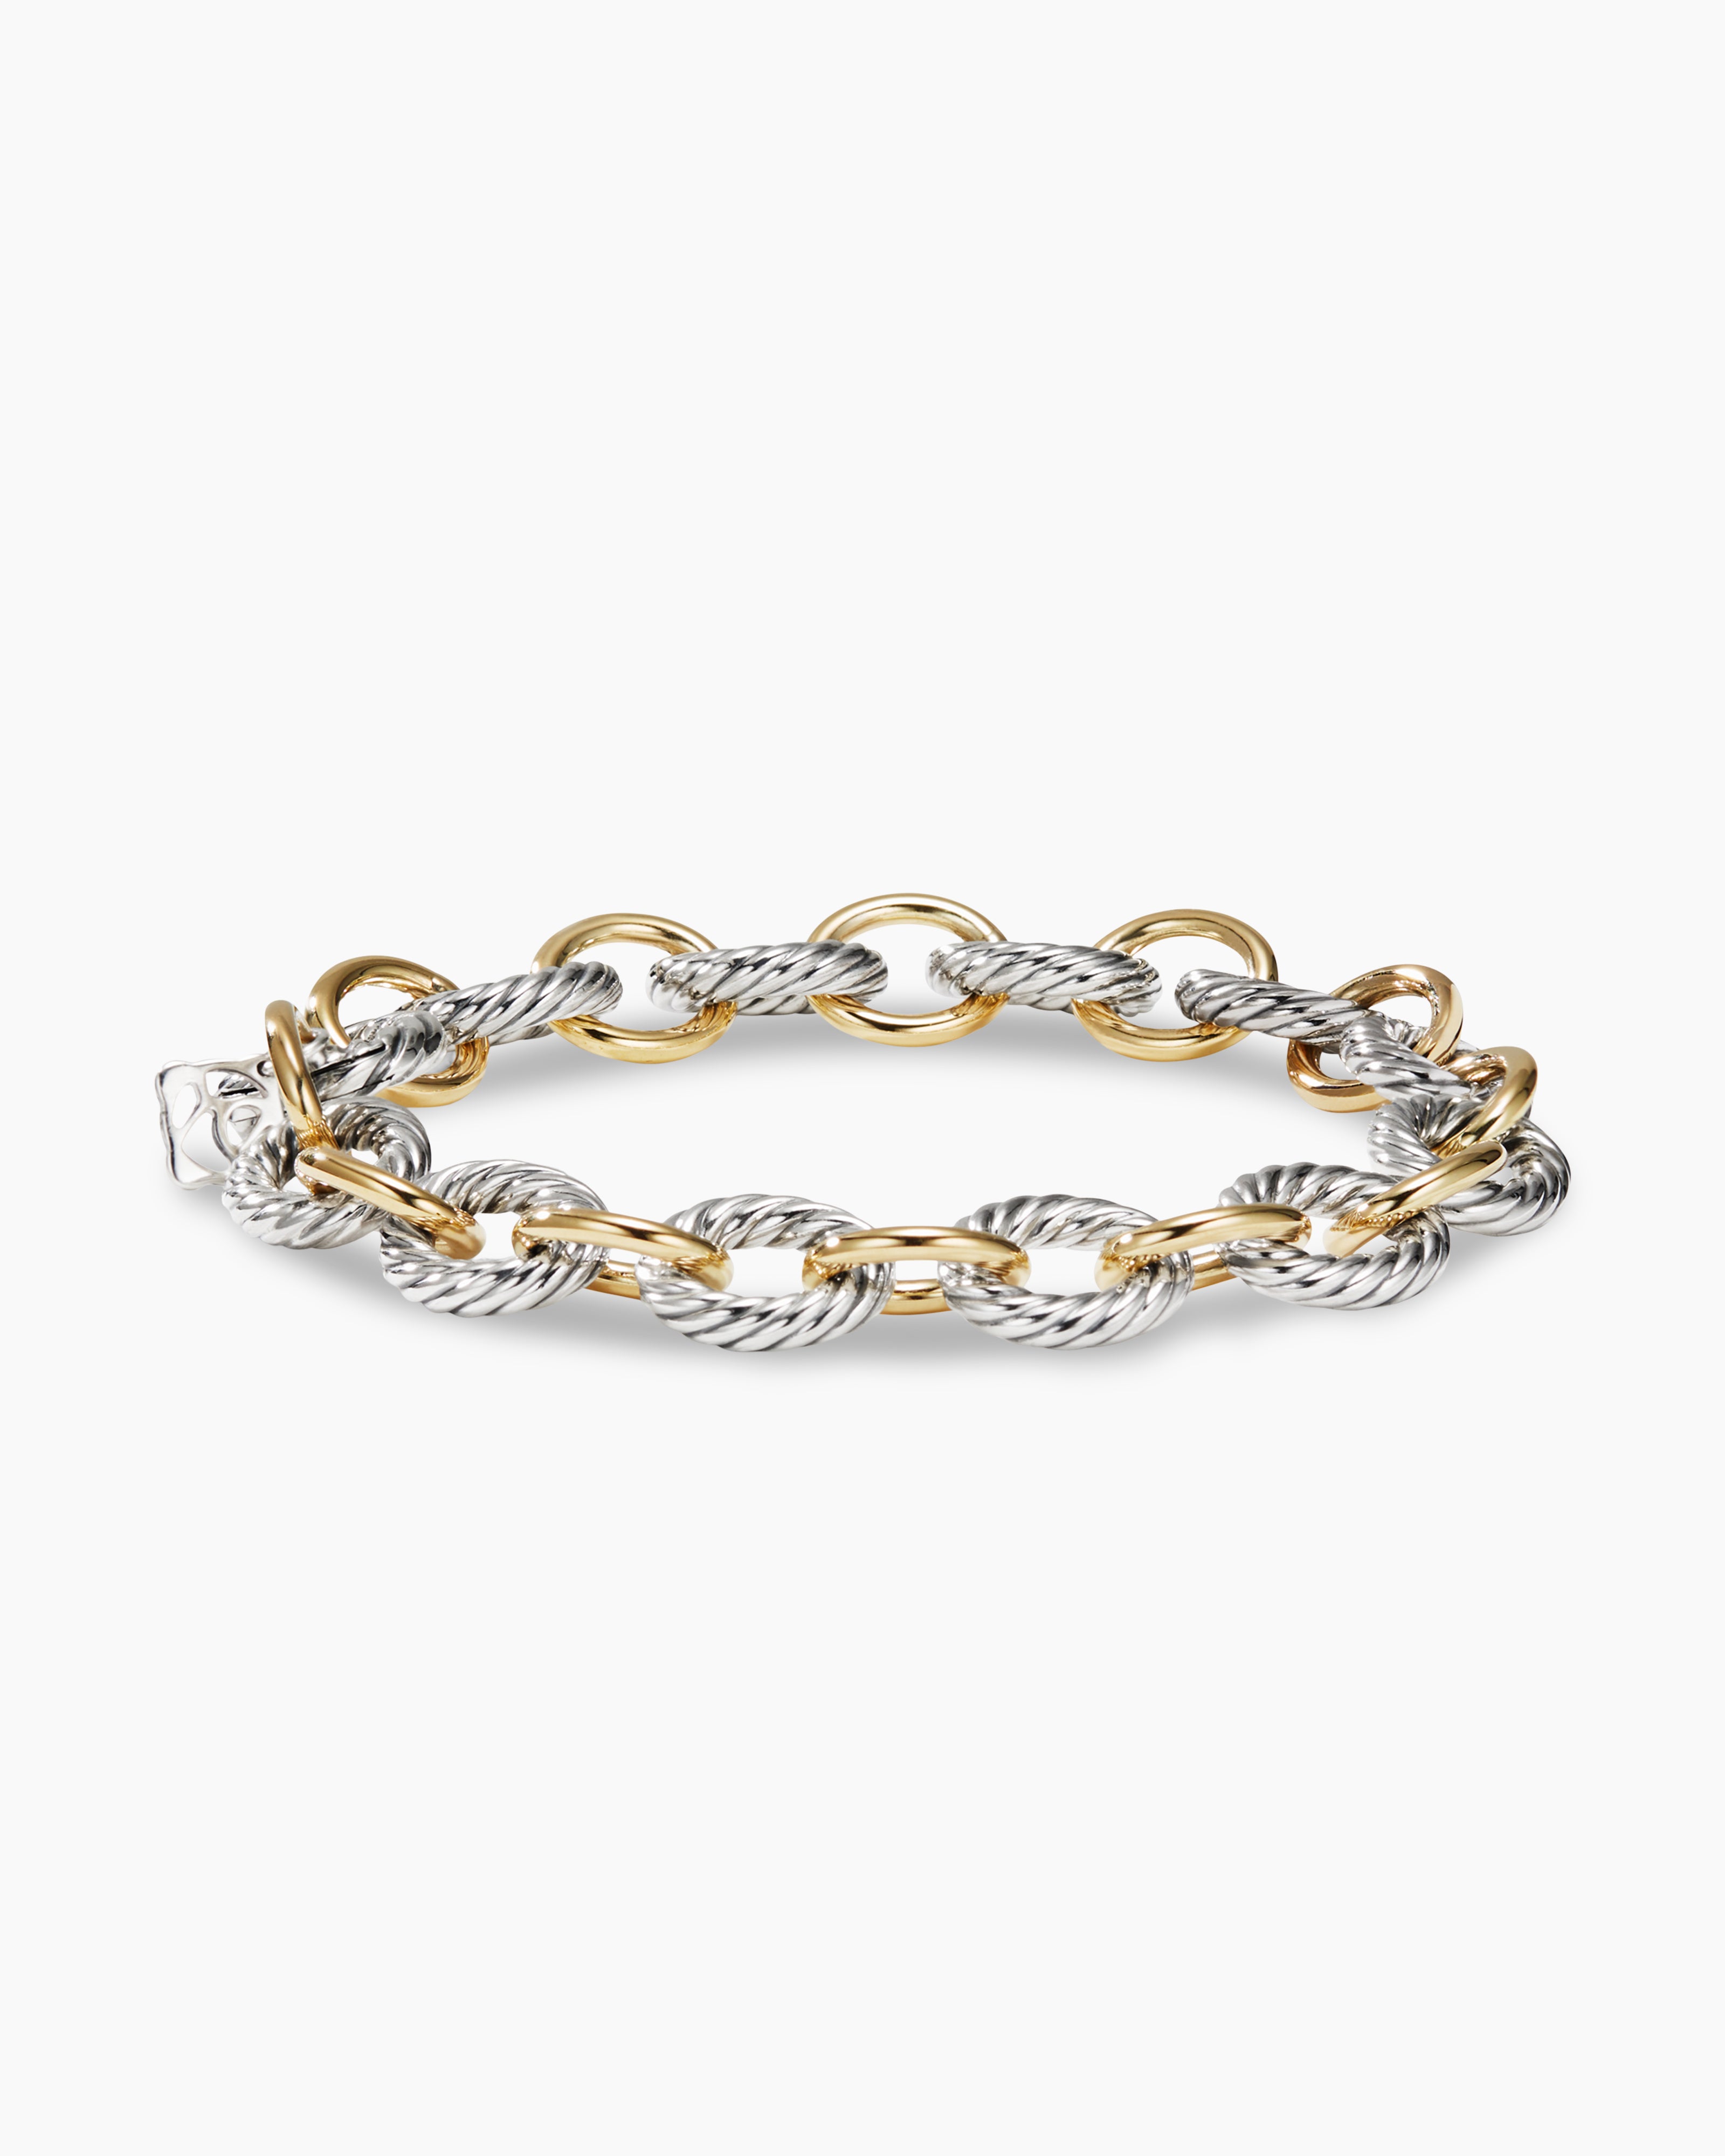 Buy Designer & Fashionable Men's Chain & Bracelets . We have a wide range  of traditional, modern and handmade Medium,Links Chains Online |  menjewell.com